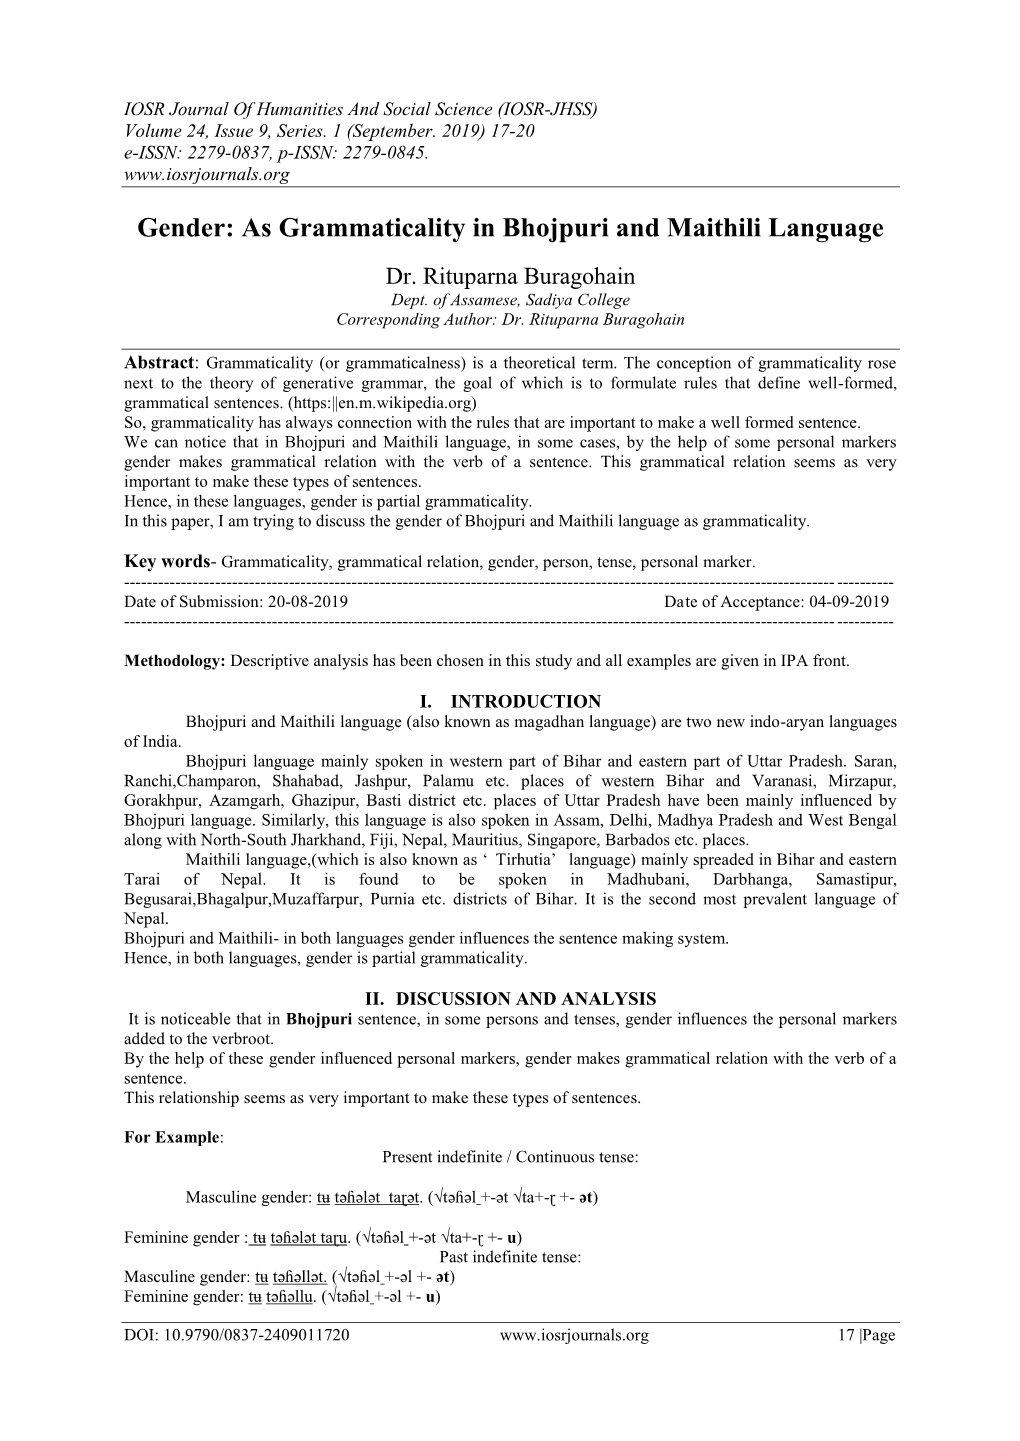 Gender: As Grammaticality in Bhojpuri and Maithili Language